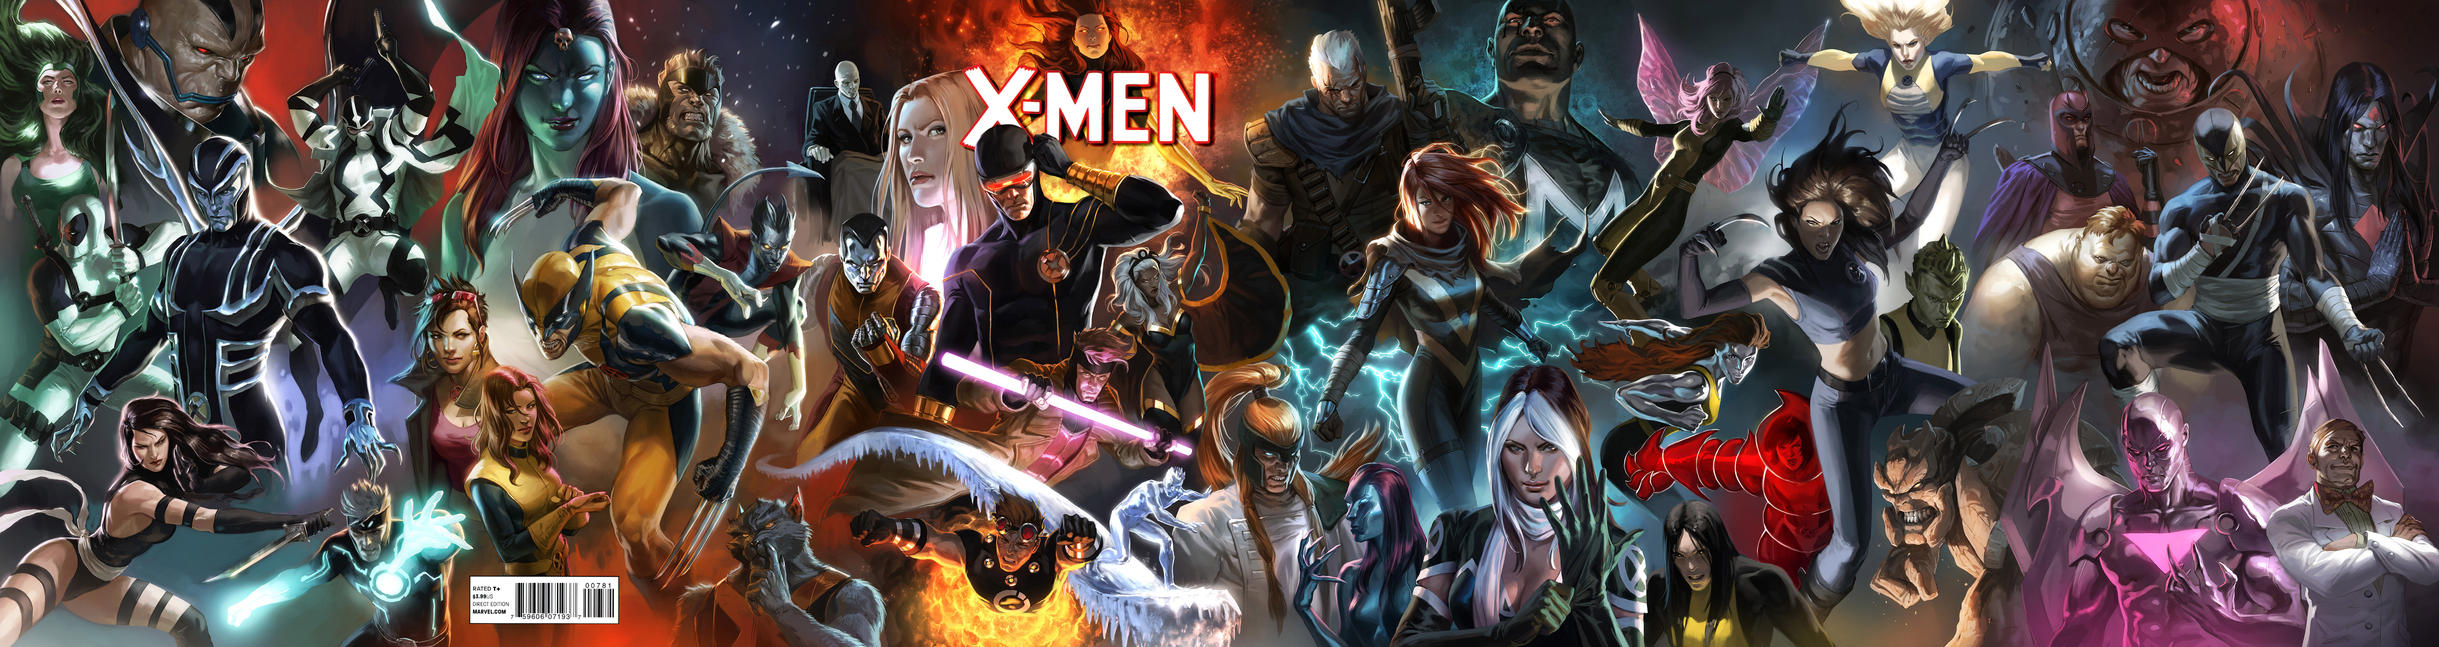 Cover for X-Men (Marvel, 2010 series) #7 [Variant Edition - Marko Djurdjevic]